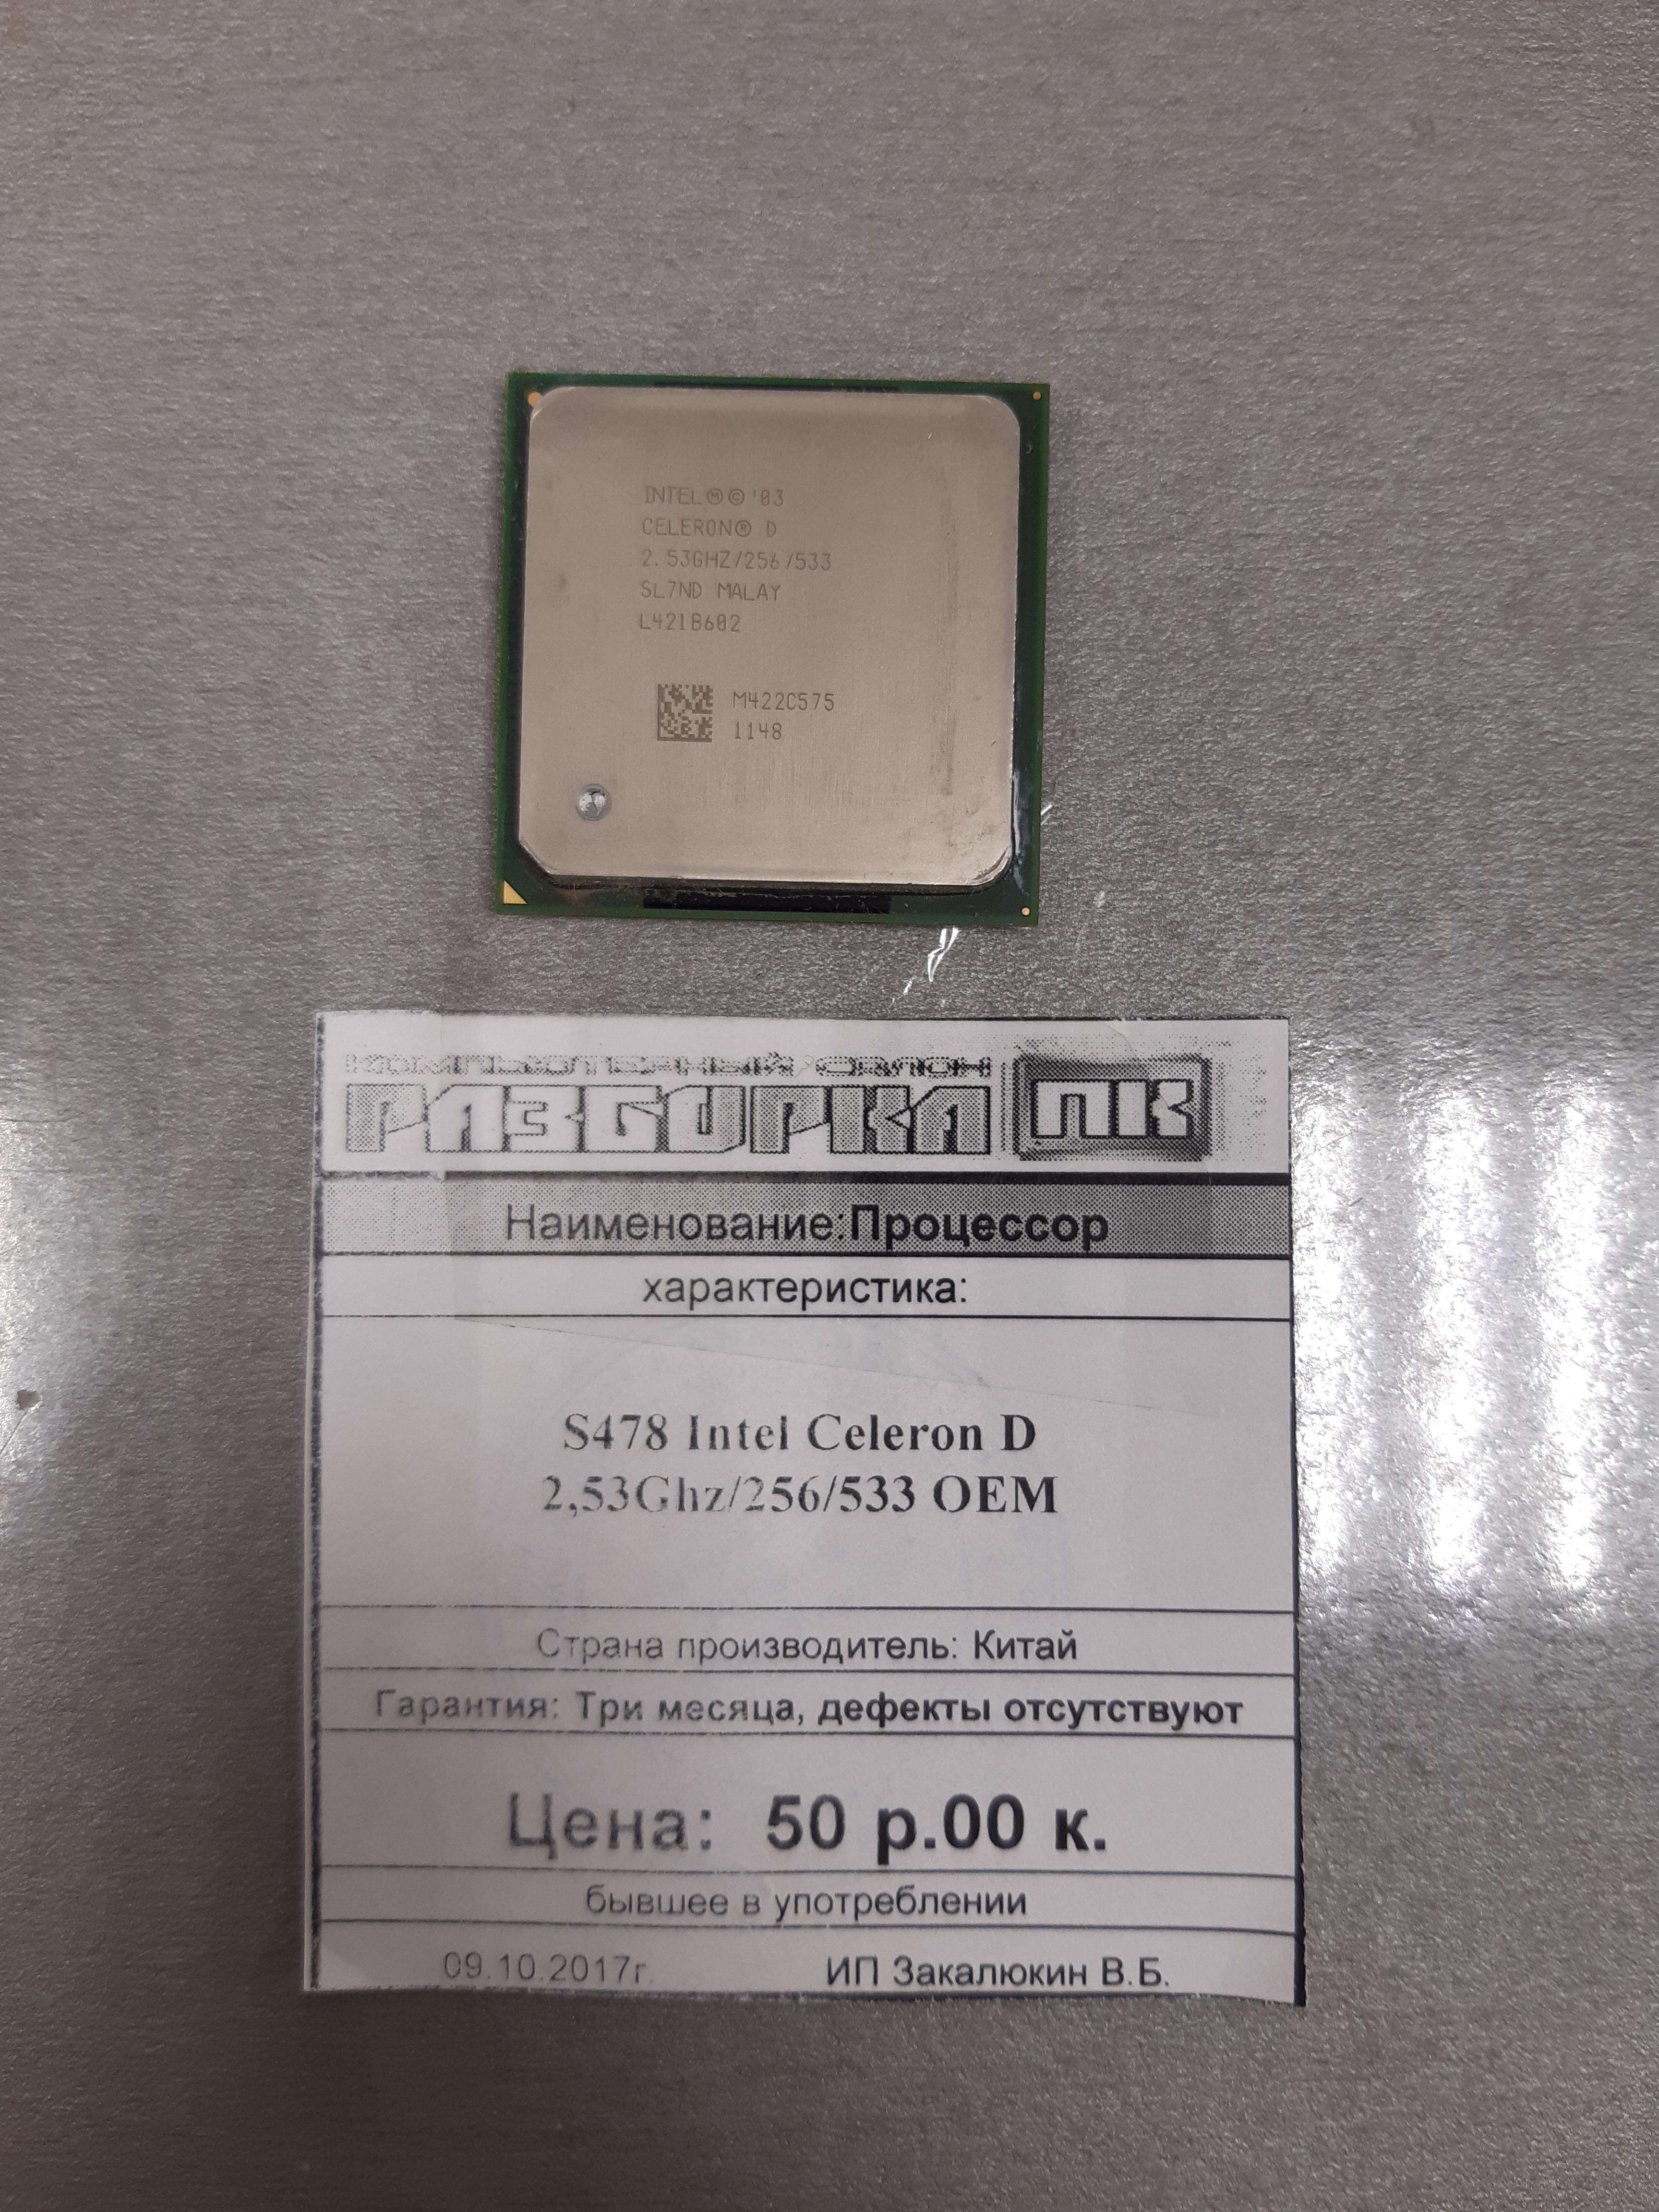 Процессор S478 Intel Celeron D 2,53Ghz/256/533 OEM